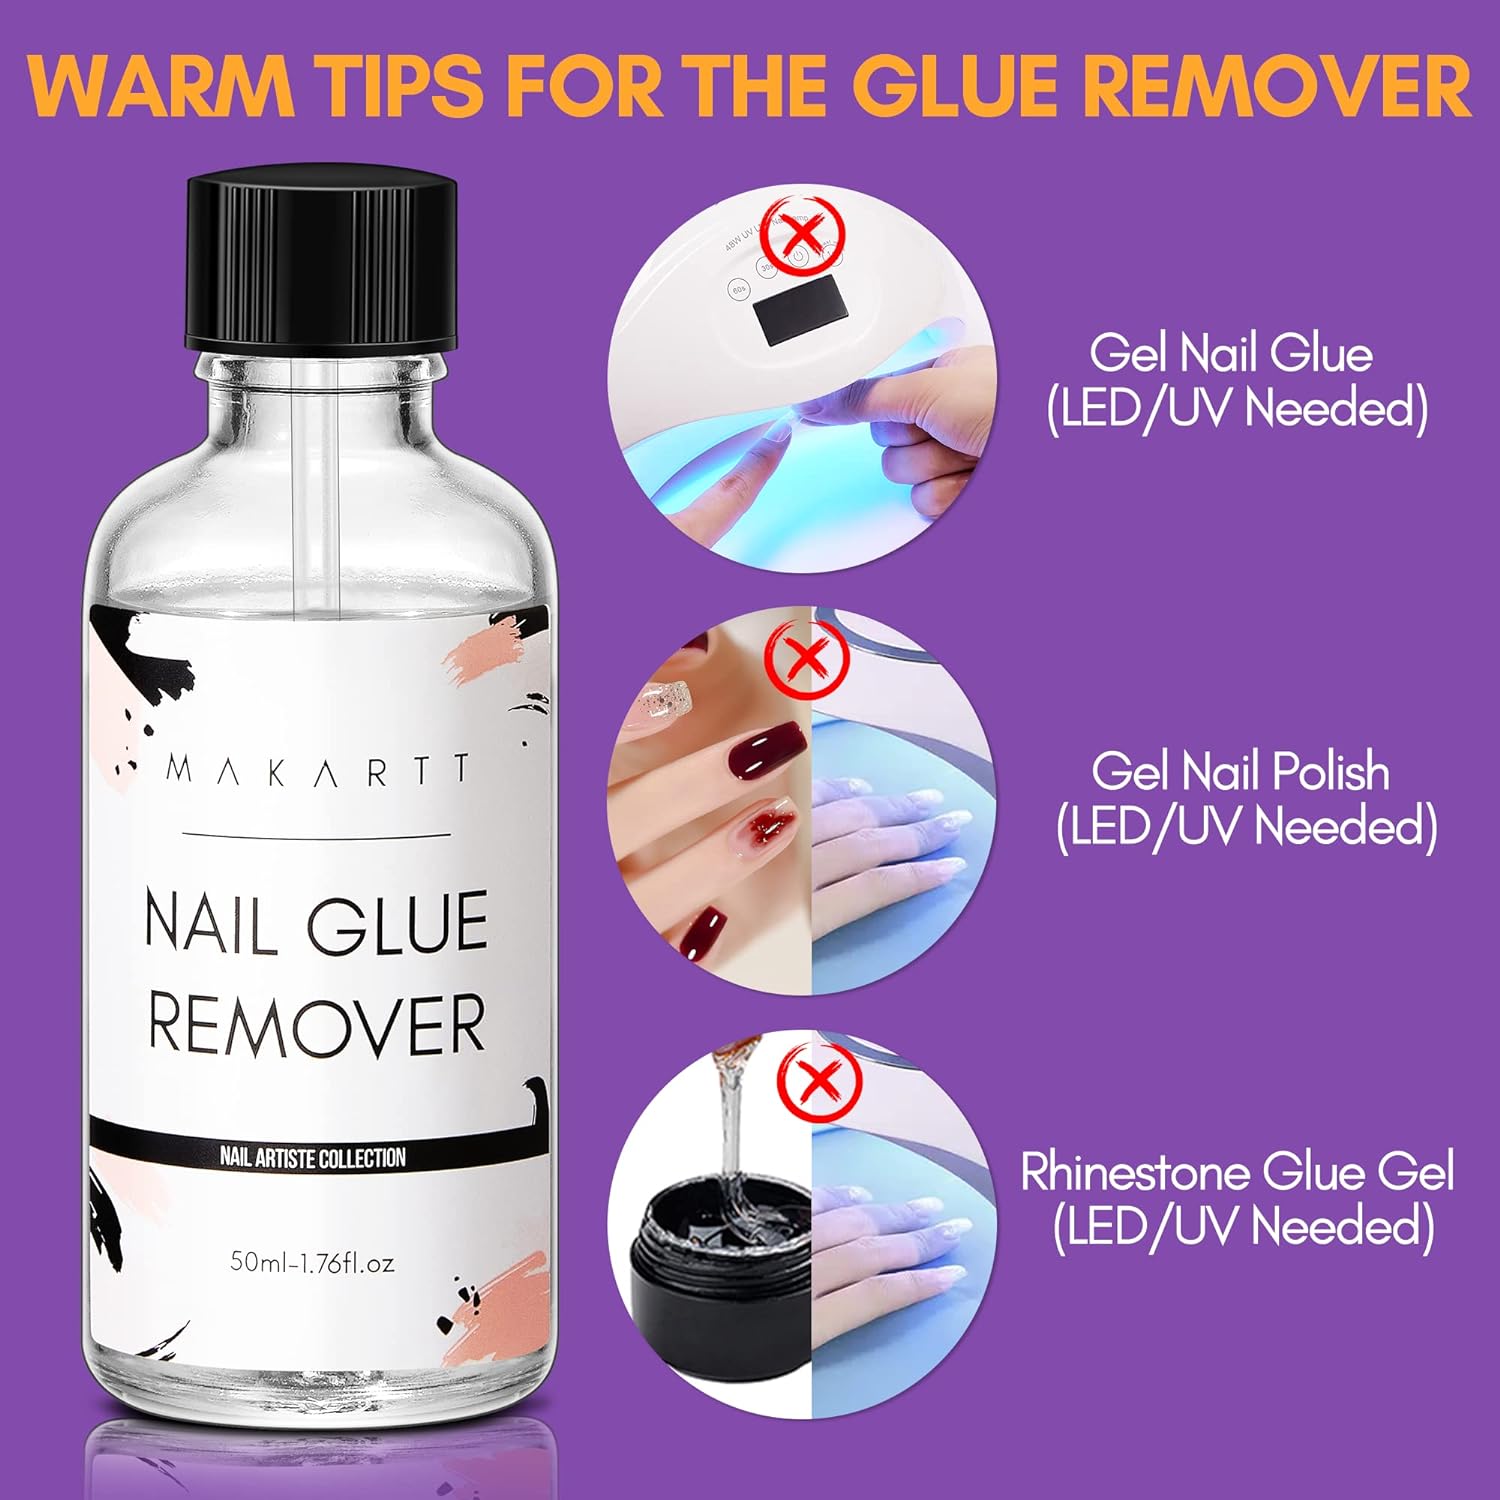 15ml Debonder Nail Glue Remover Glue Off for Press on Nails